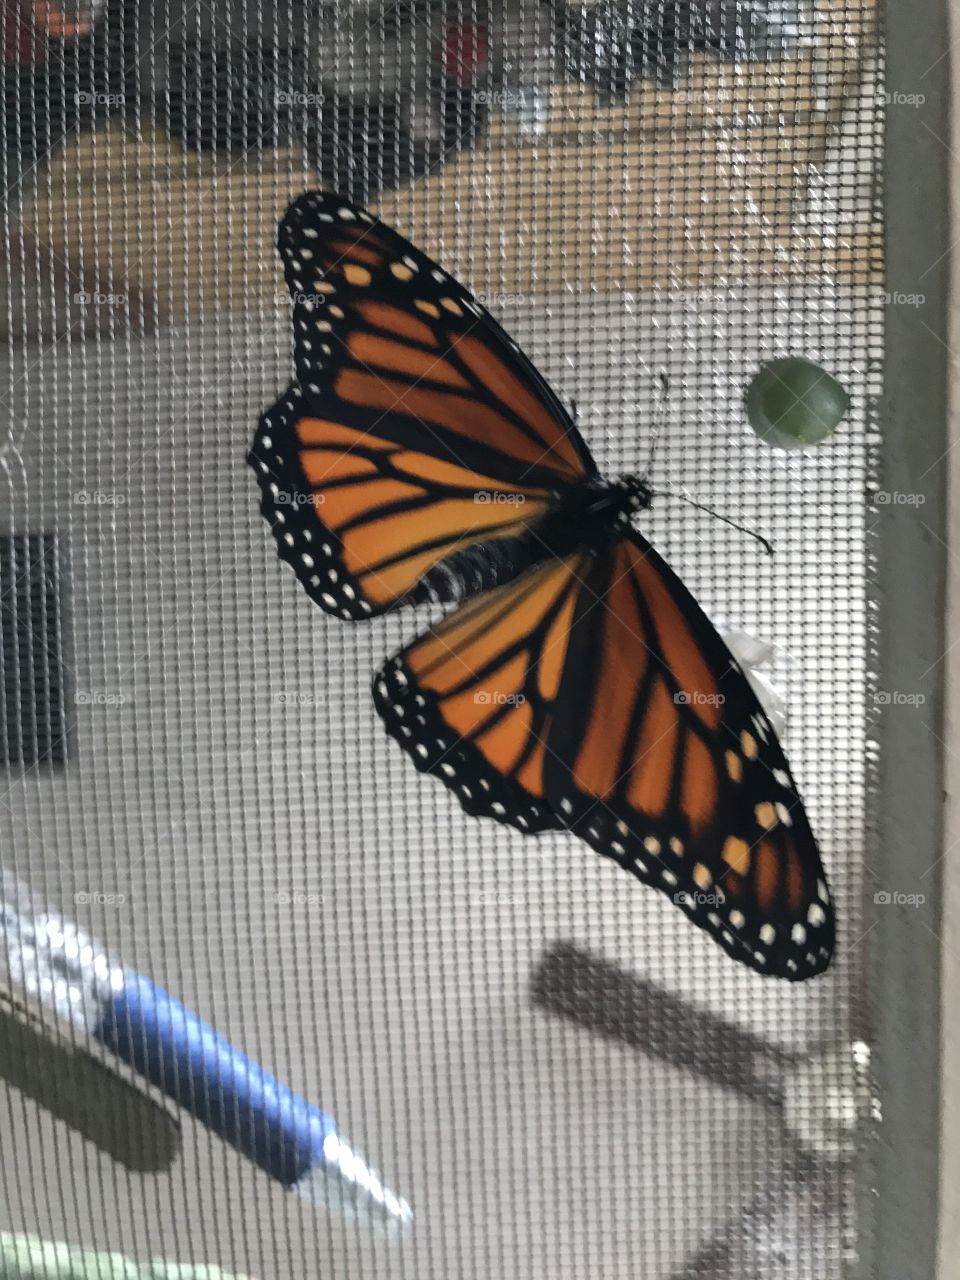 Monarch wing span 